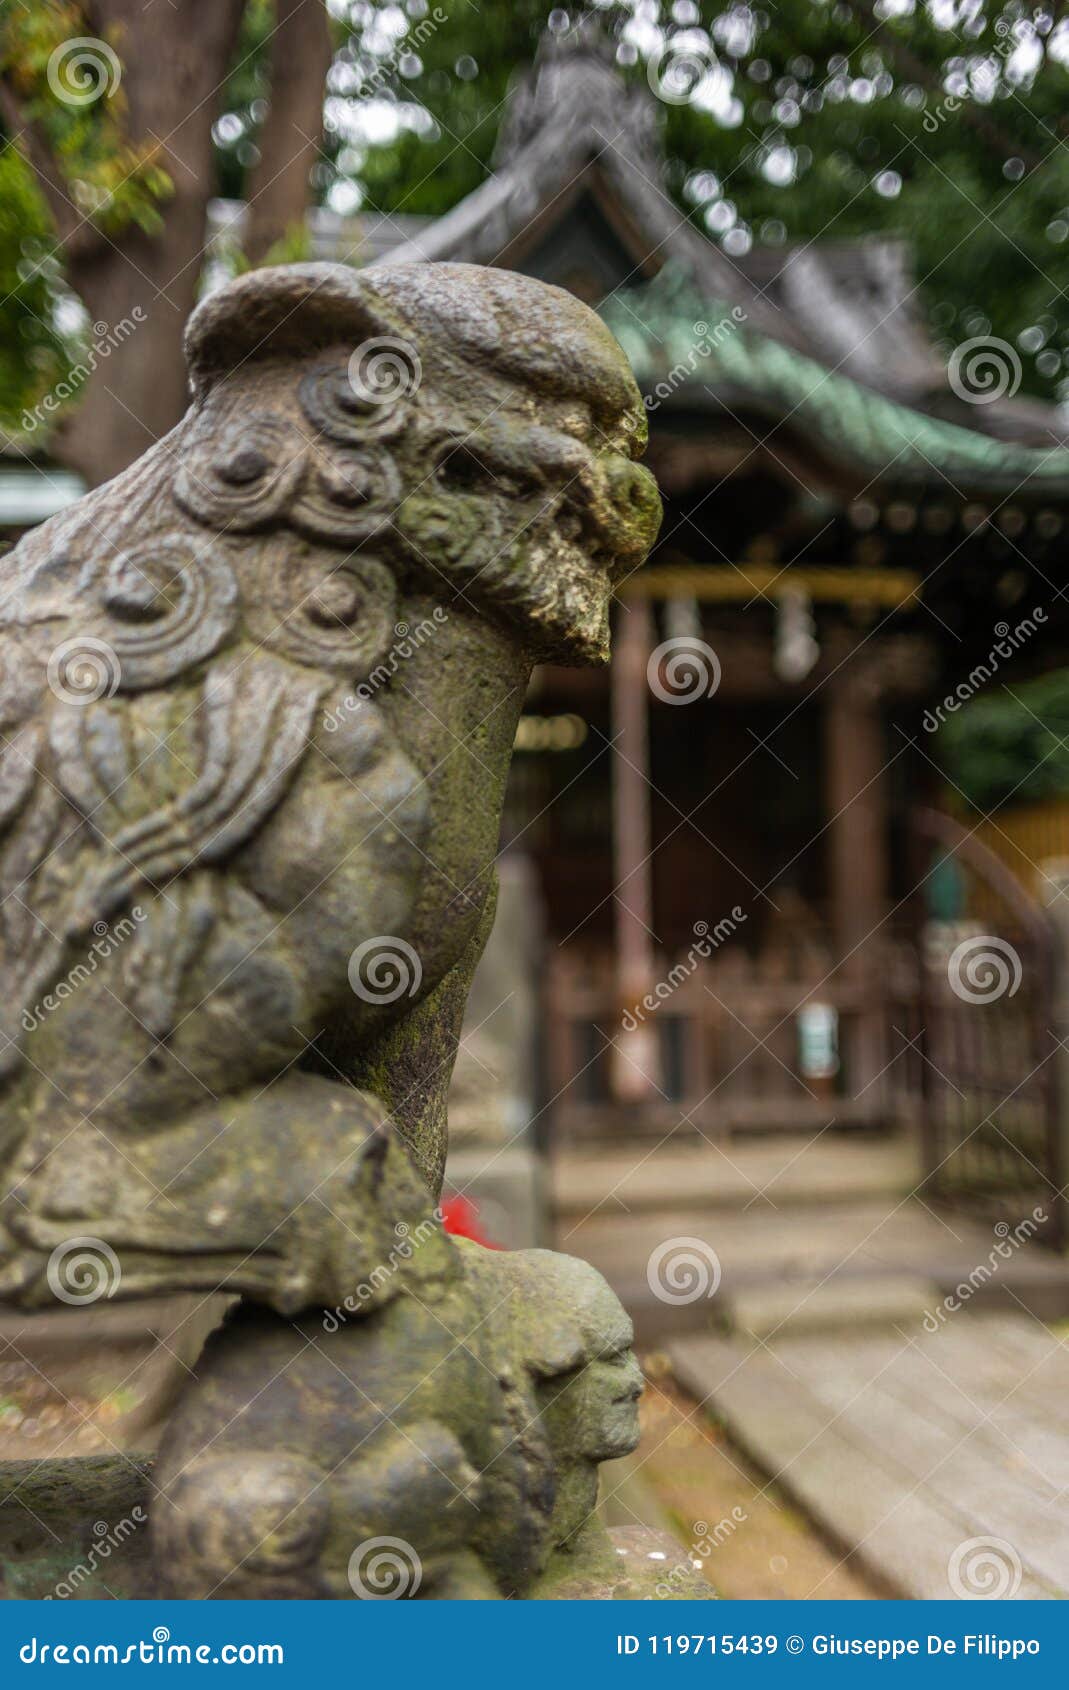 a stone dragon in a shintoist shrine in tokyo